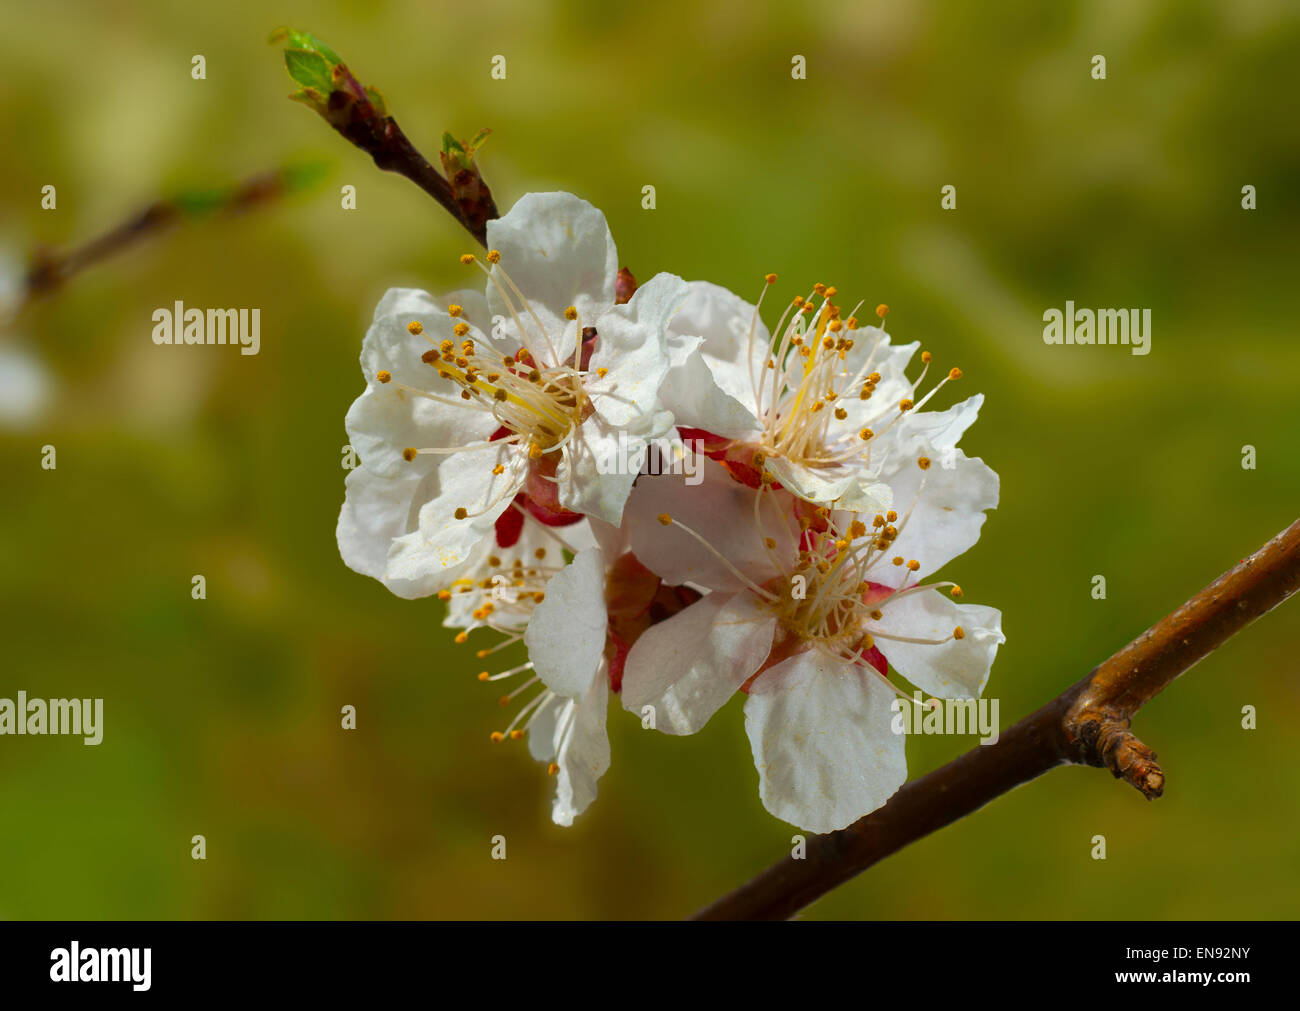 A branch of apricot flowers(Prunus armeniaca). Stock Photo